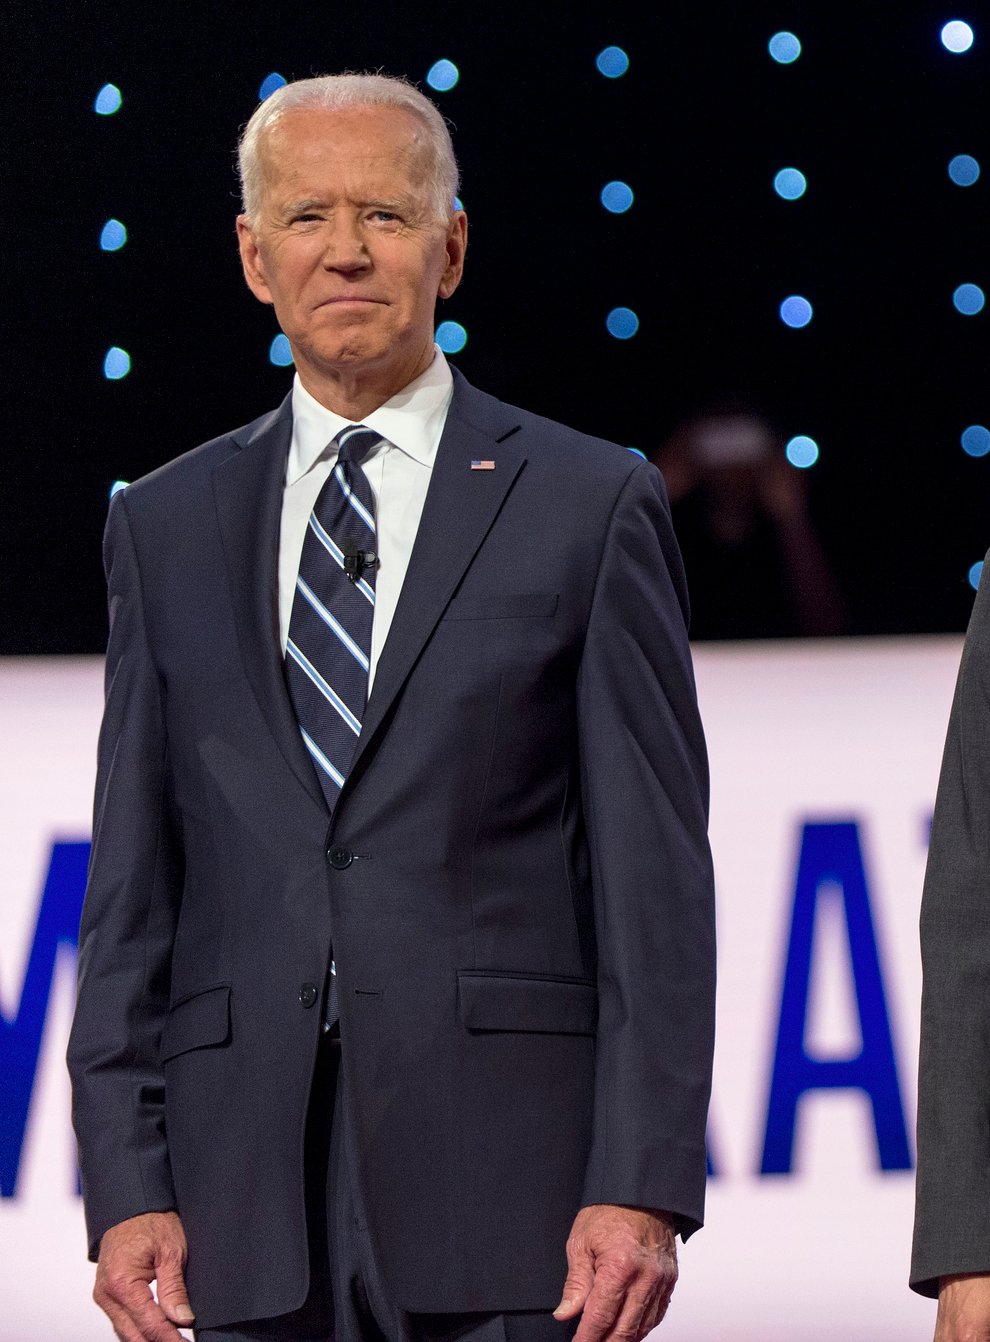 Harris was announced as Biden's vice-president earlier this week